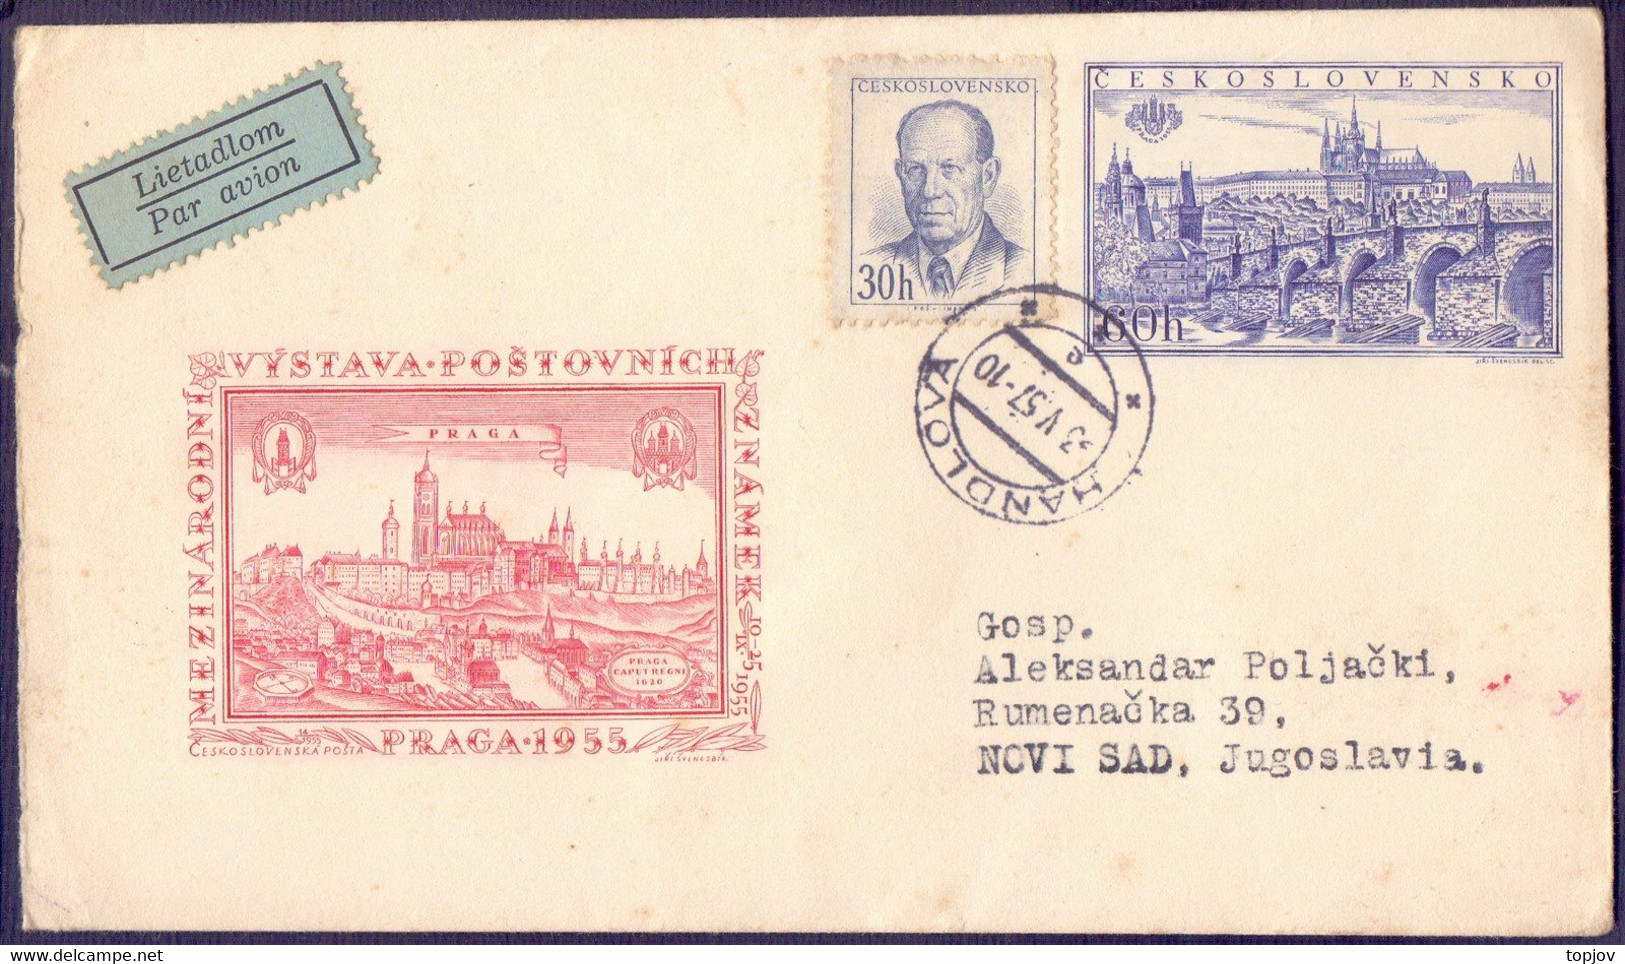 CZECHOSLOVAKIA - PRAGA - BRIDGE - 1957 - Covers